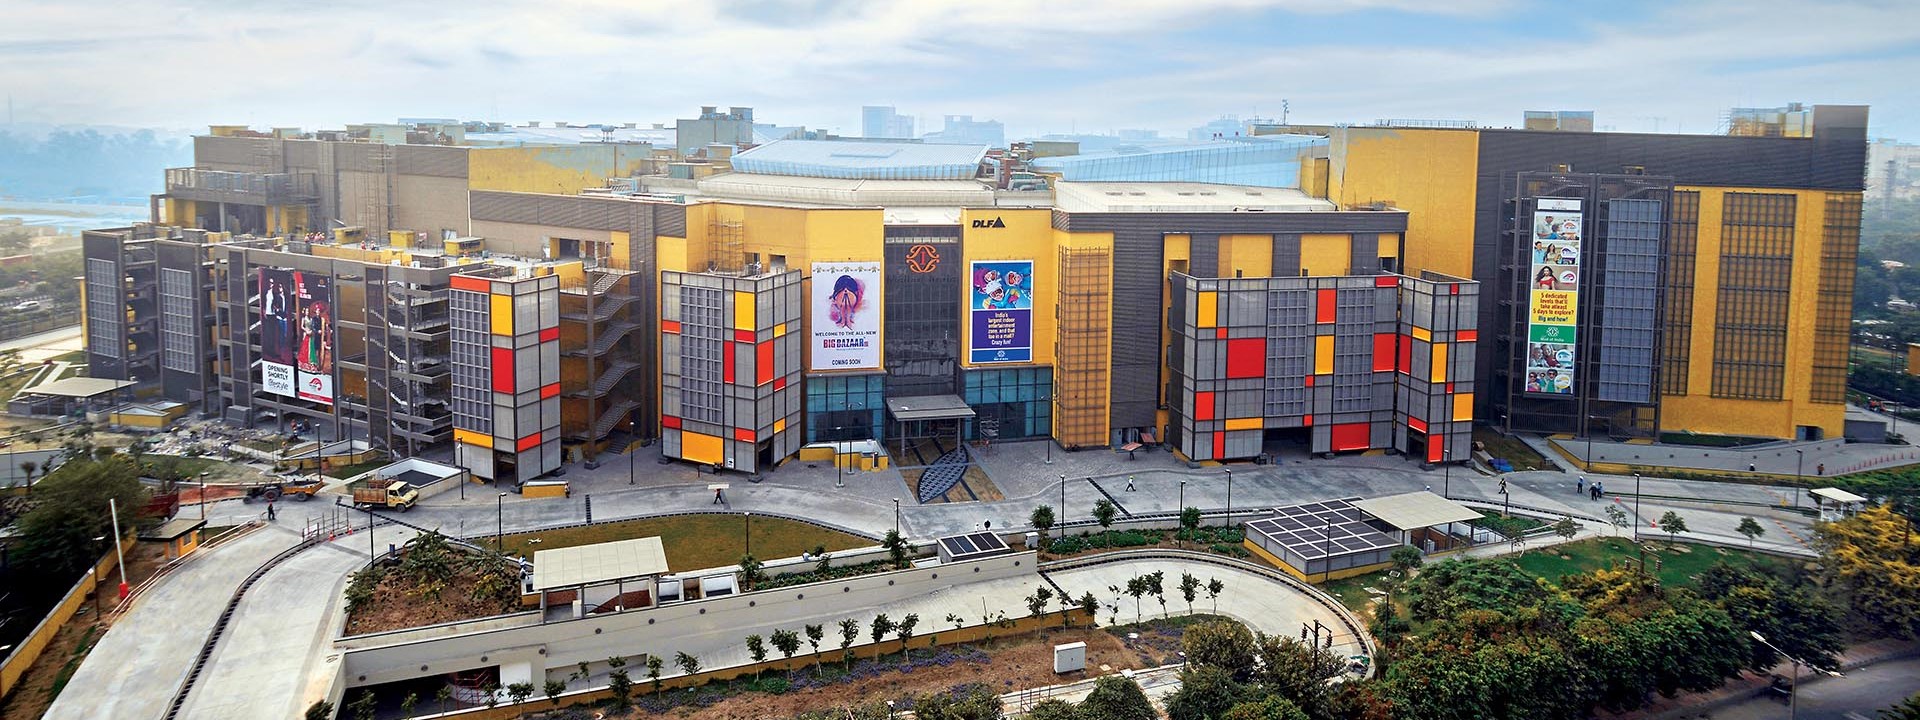 Under-Construction Mall (DLF Emporio), A mall under constru…